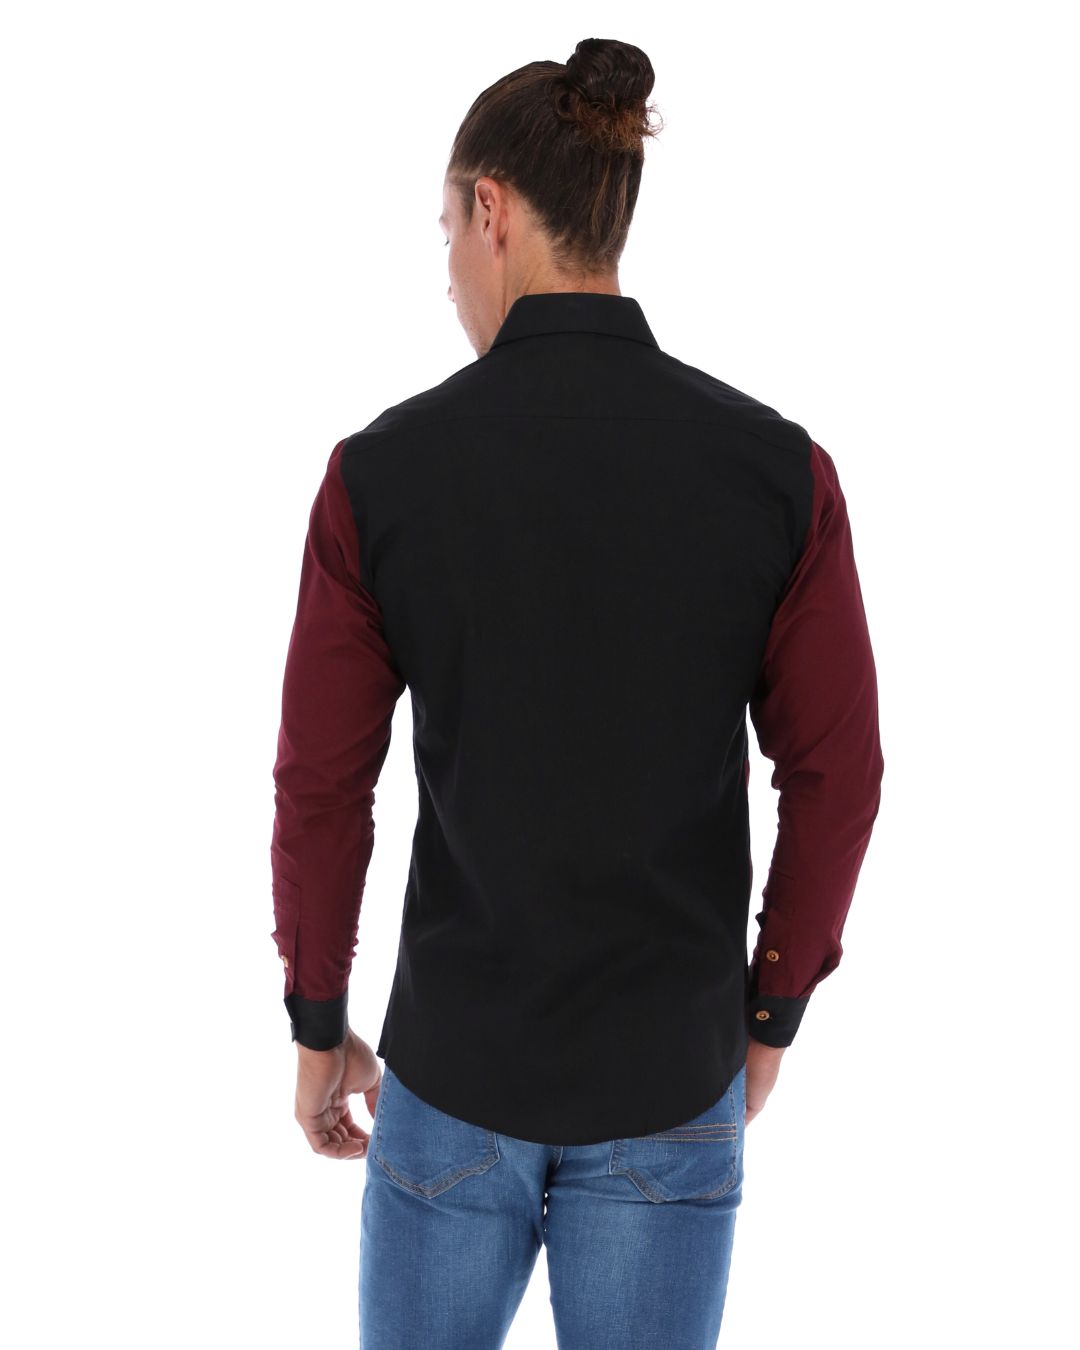 Men's Patchwork Long Sleeve Button Down Shirt Burgundy & Black